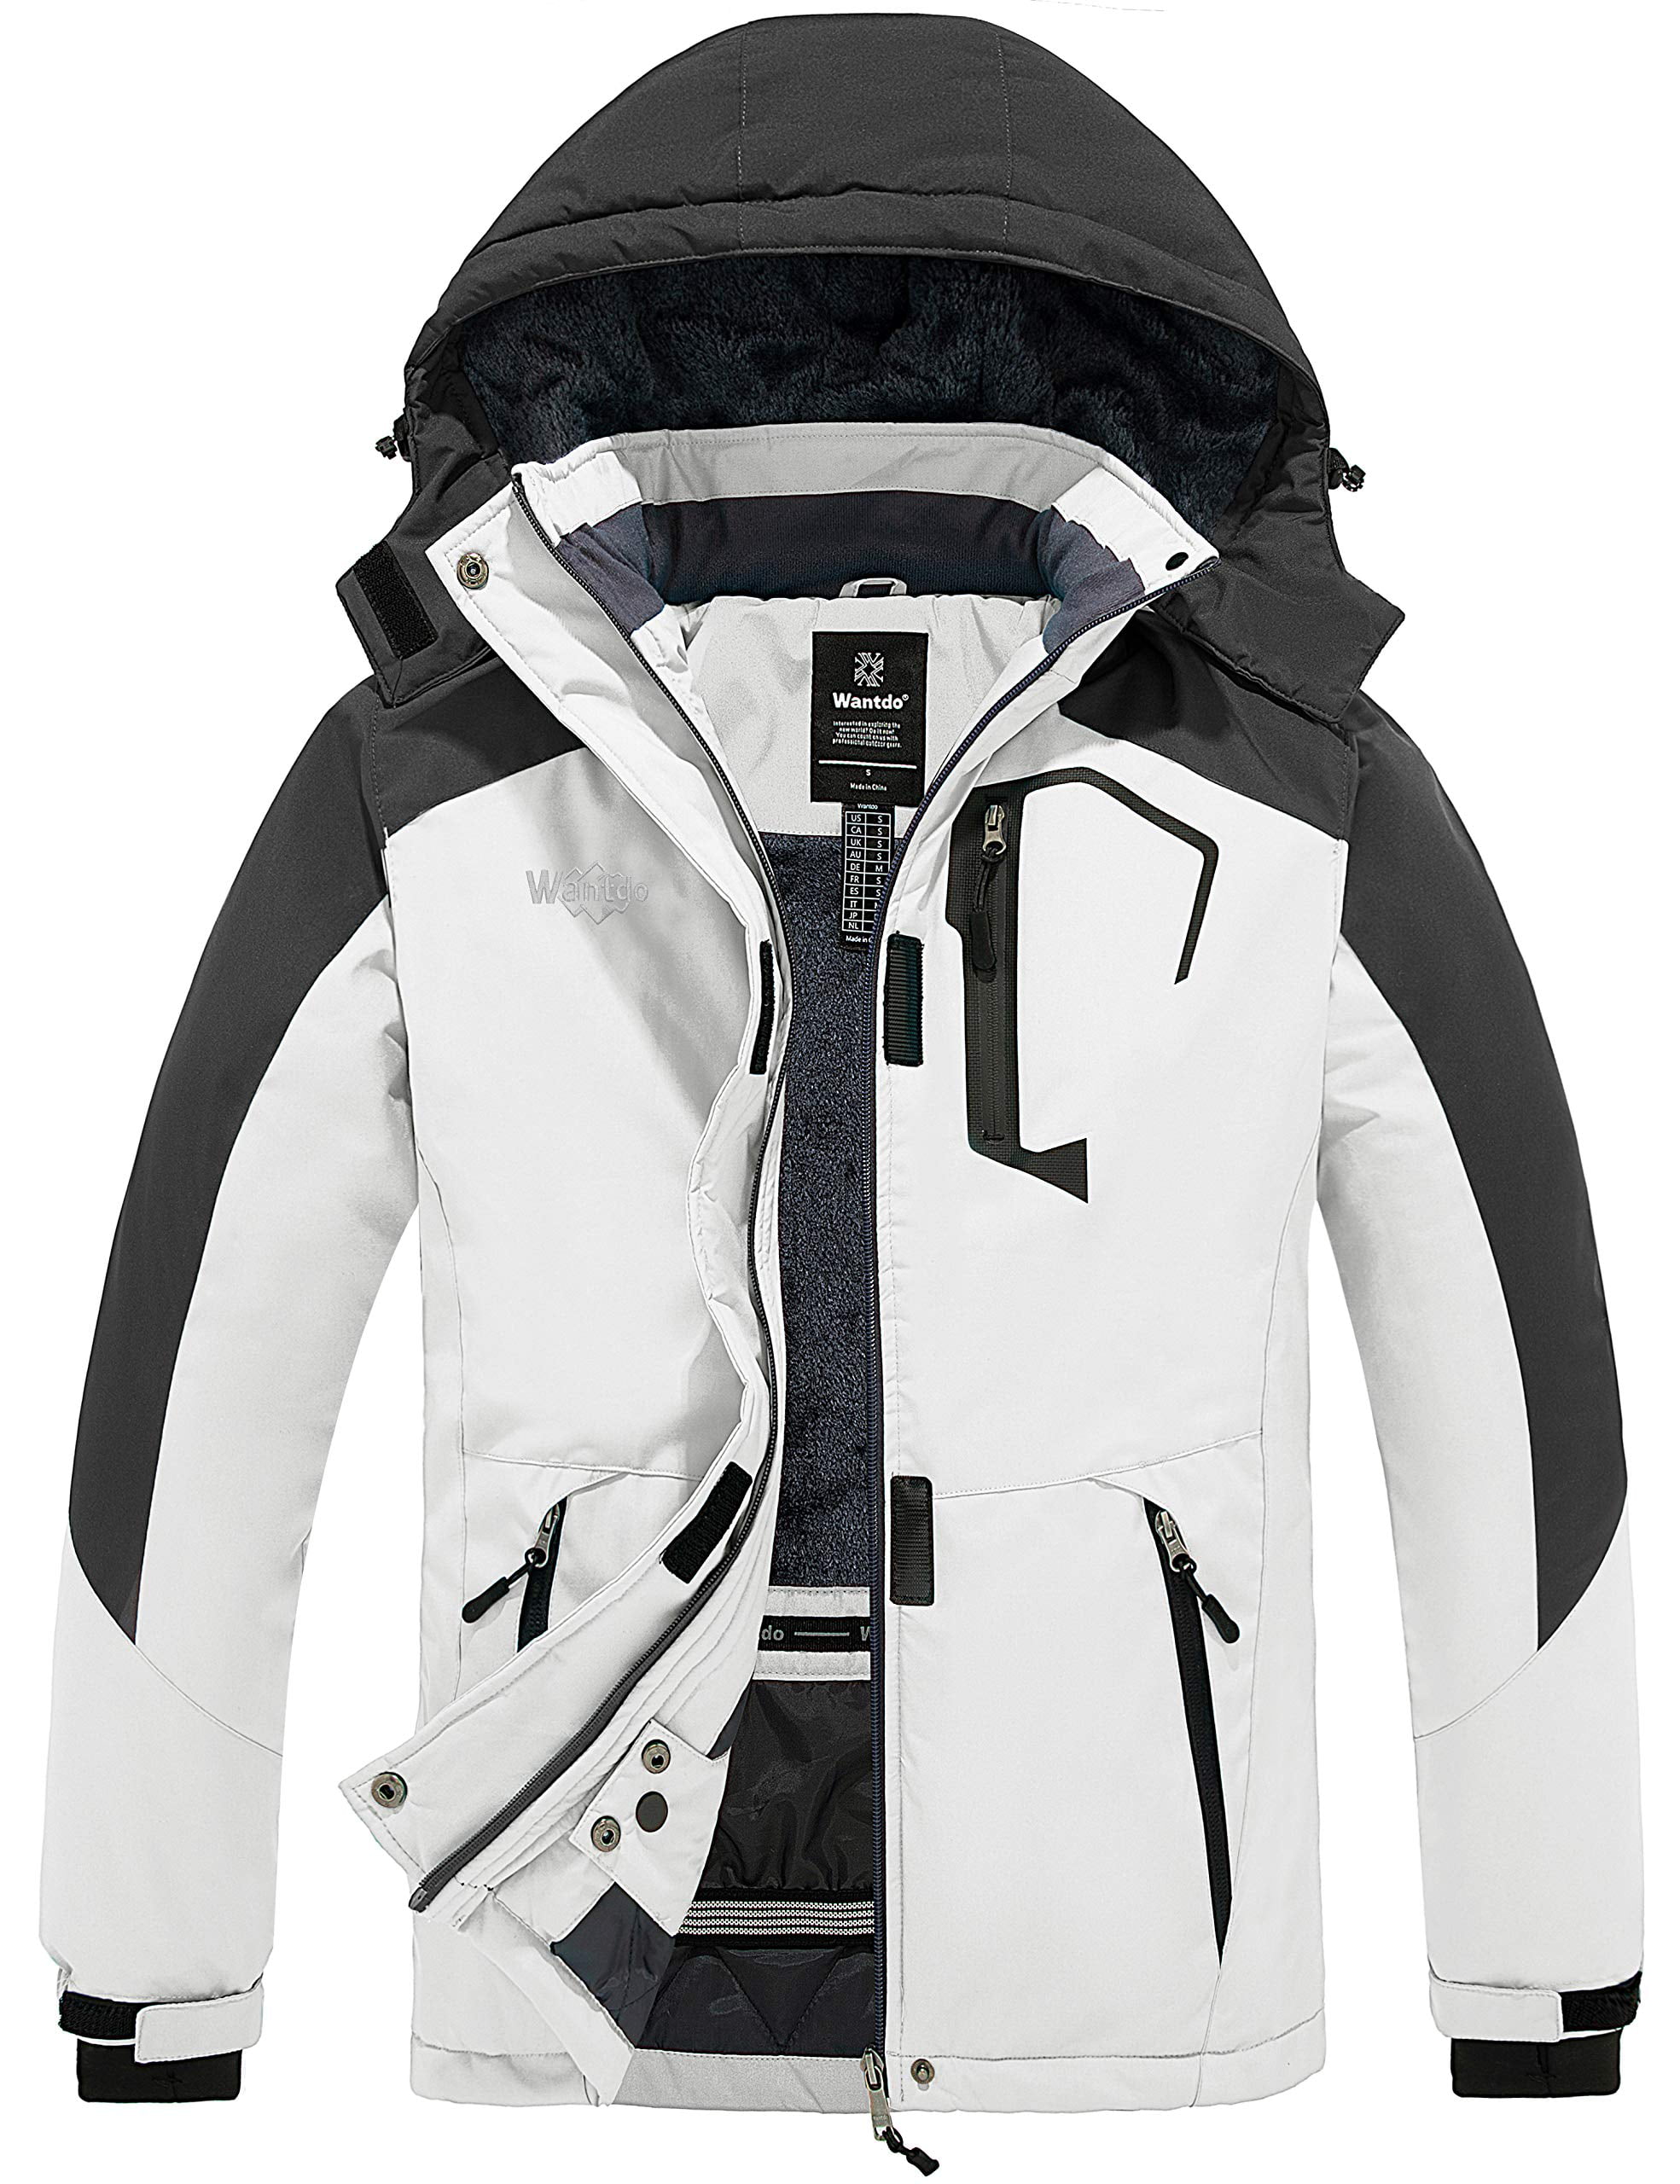 Womens Mountain Waterproof Ski Jacket Windproof Snowboarding Jacket Warm Winter Coat Raincoat 